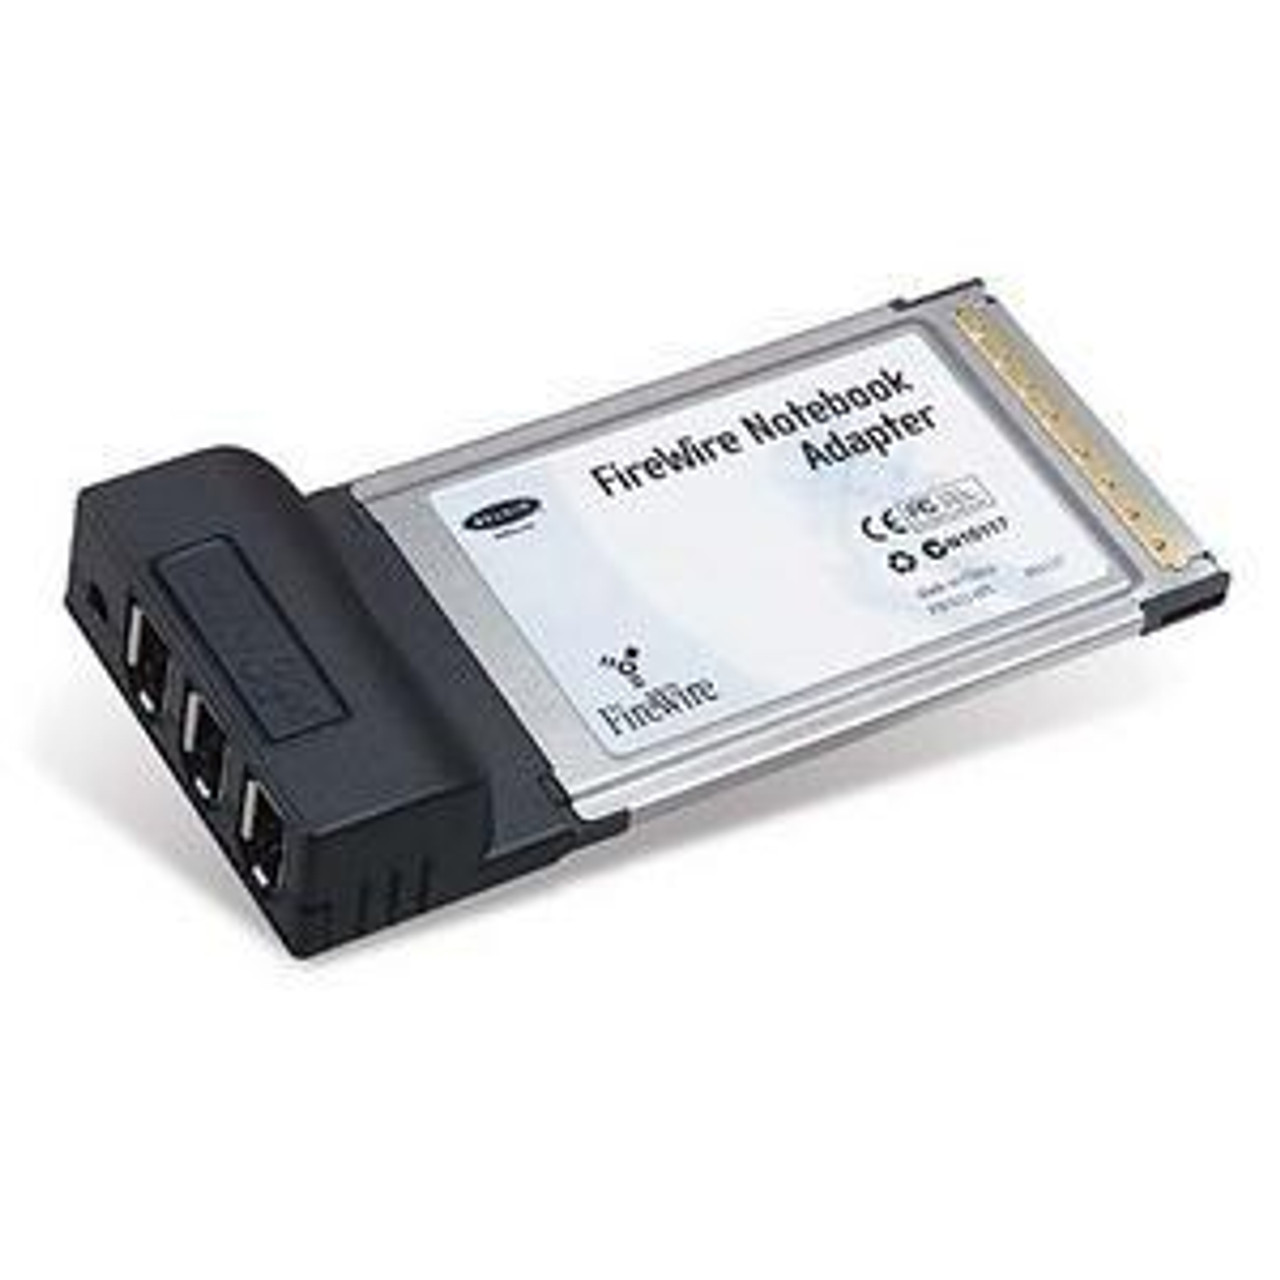 F5U512-APL Belkin FireWire Notebook Adapter 3 x 6-pin IEEE 1394 FireWire Plug-in Card